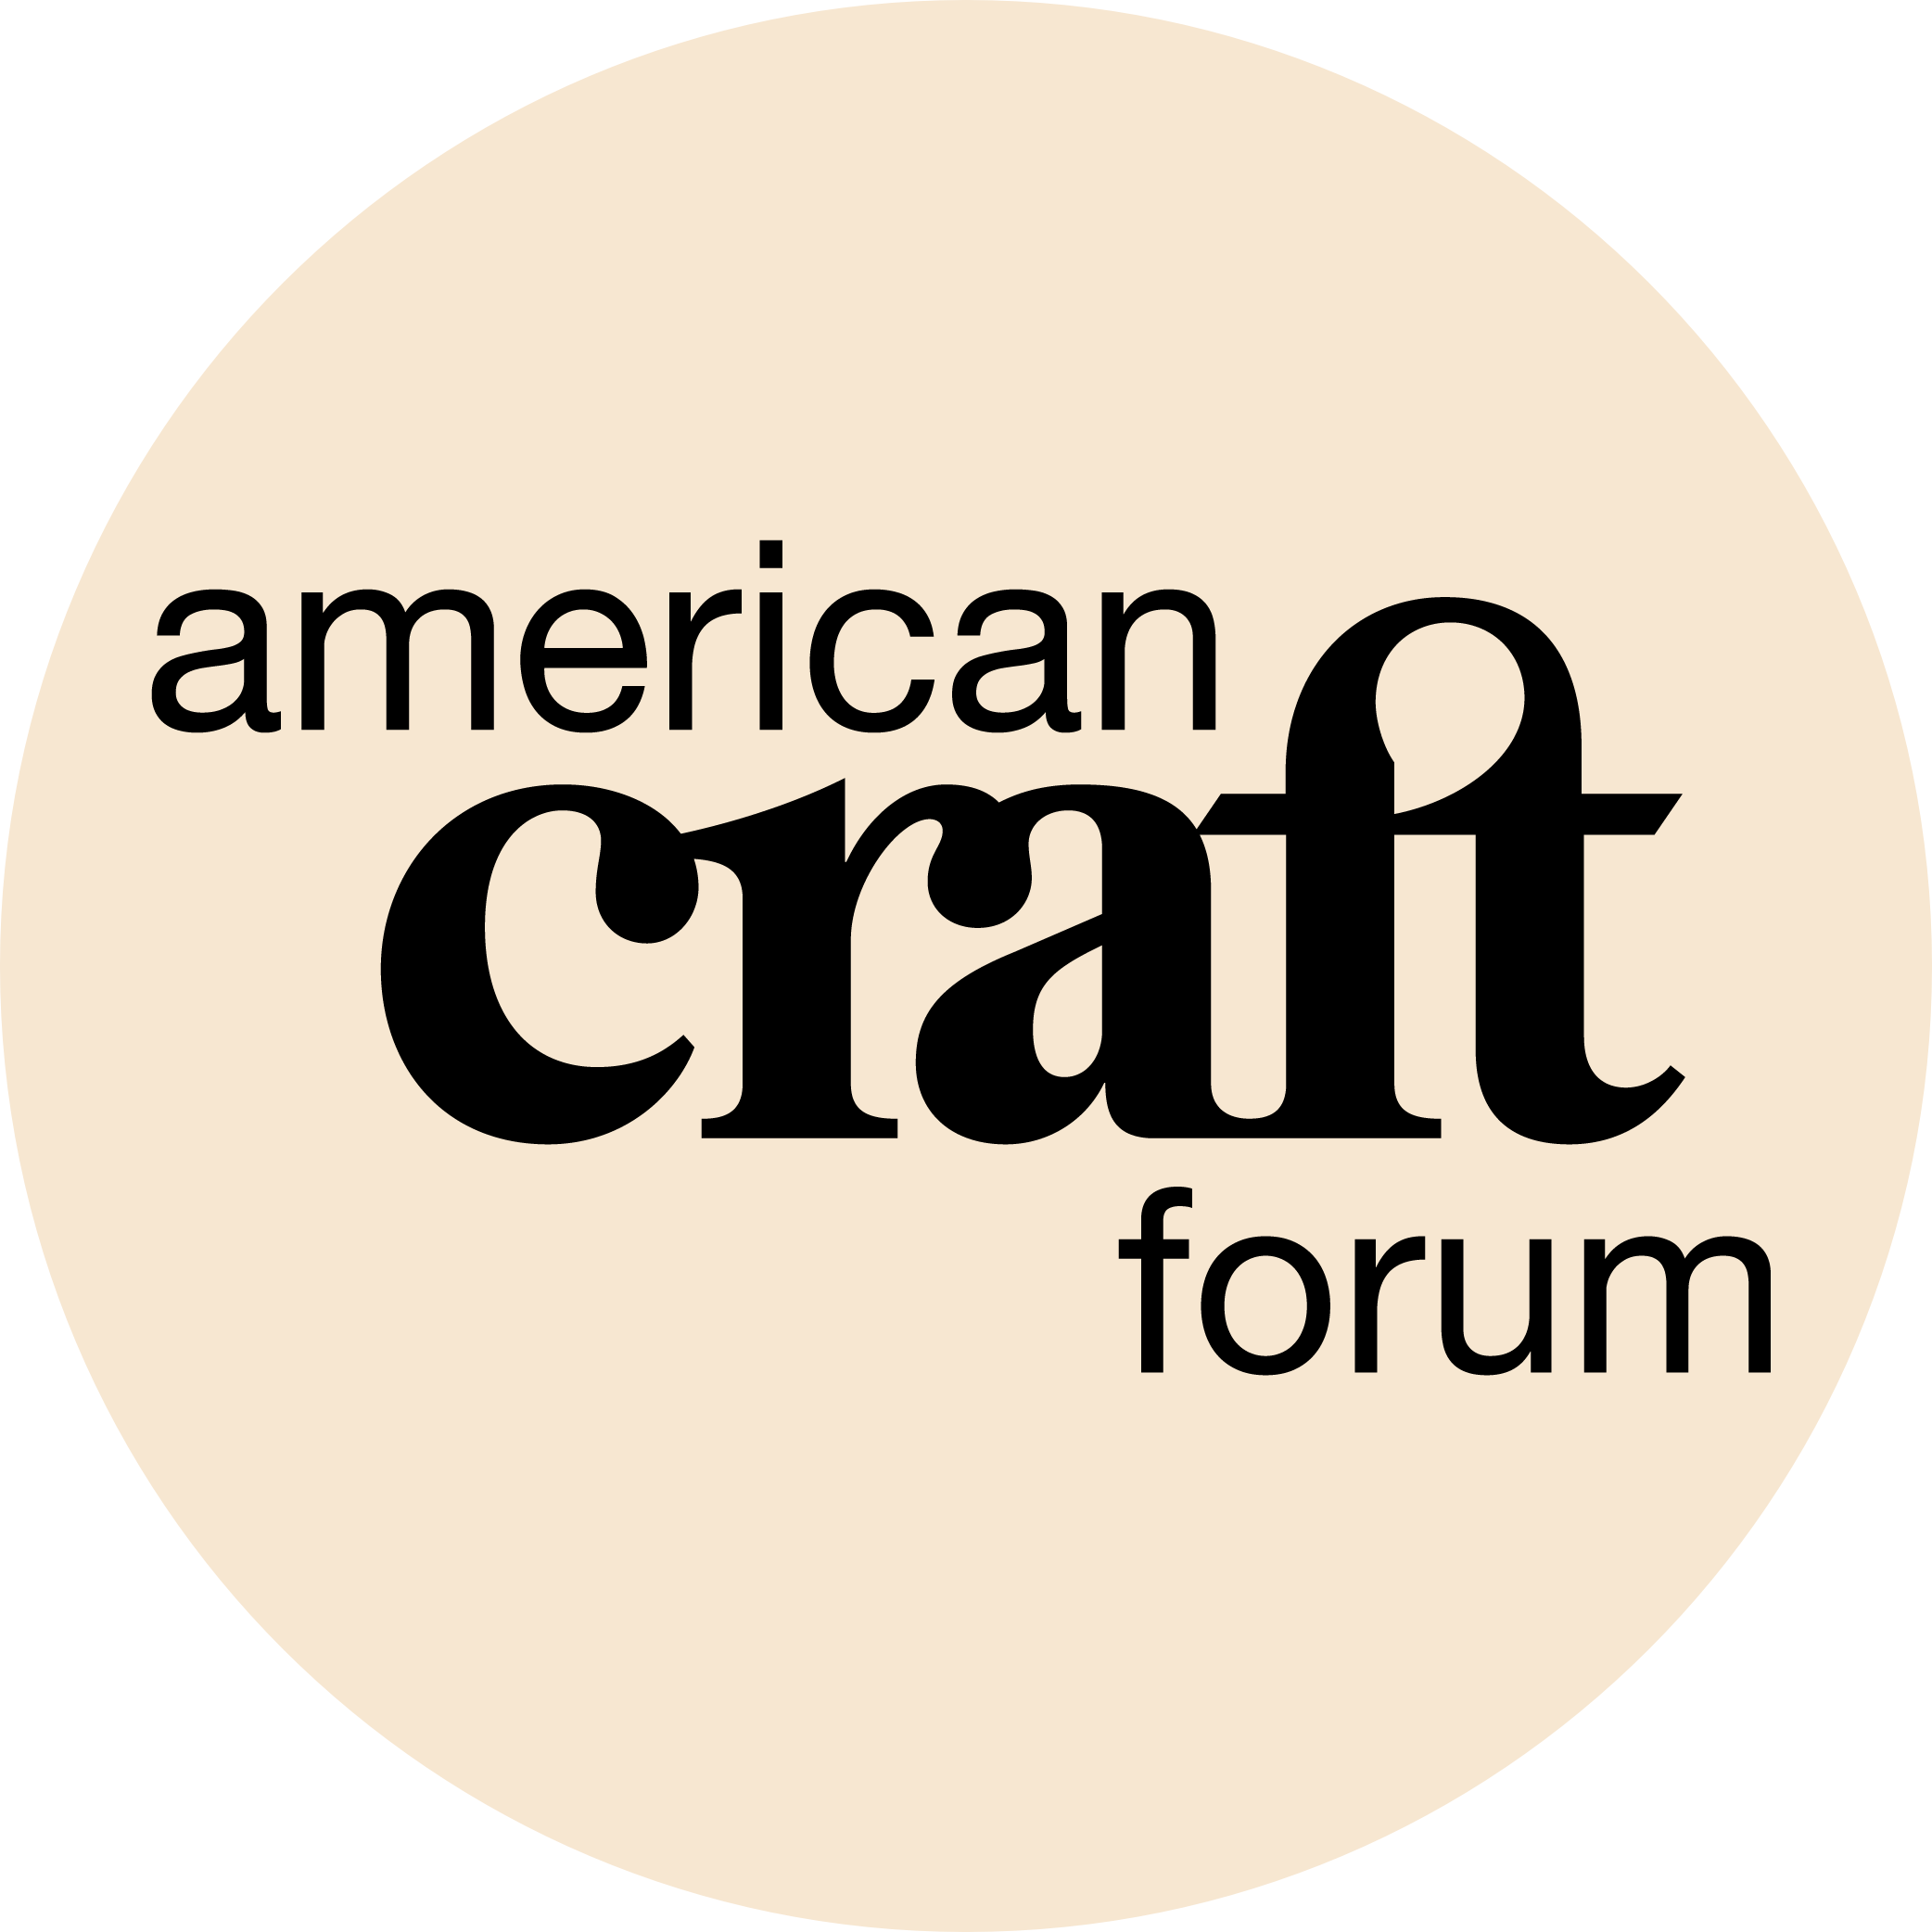 American Craft Forum logo